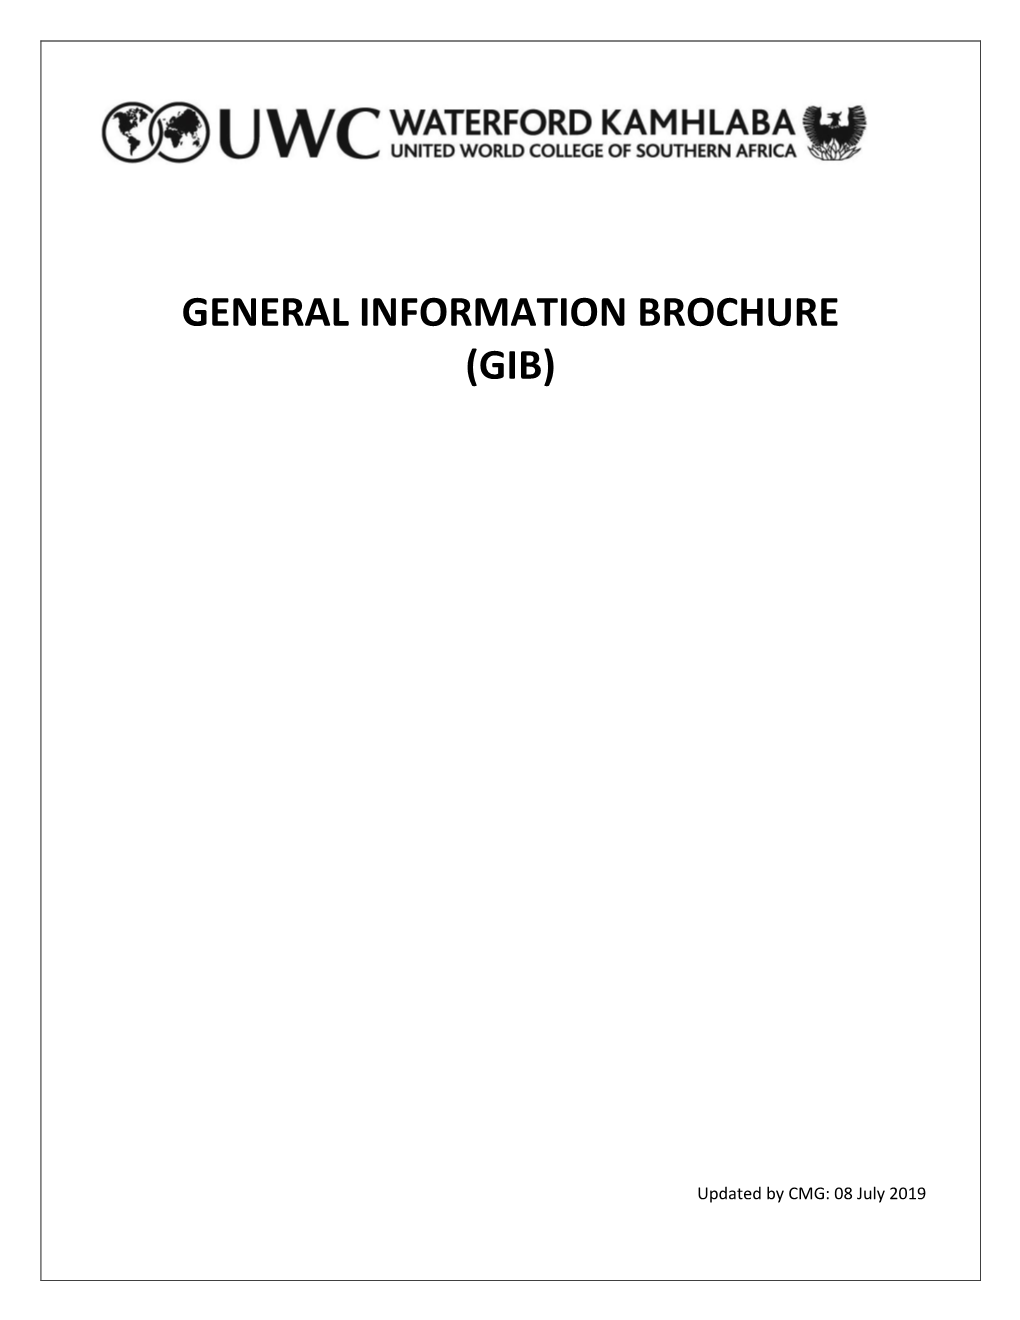 General Information Brochure (Gib)